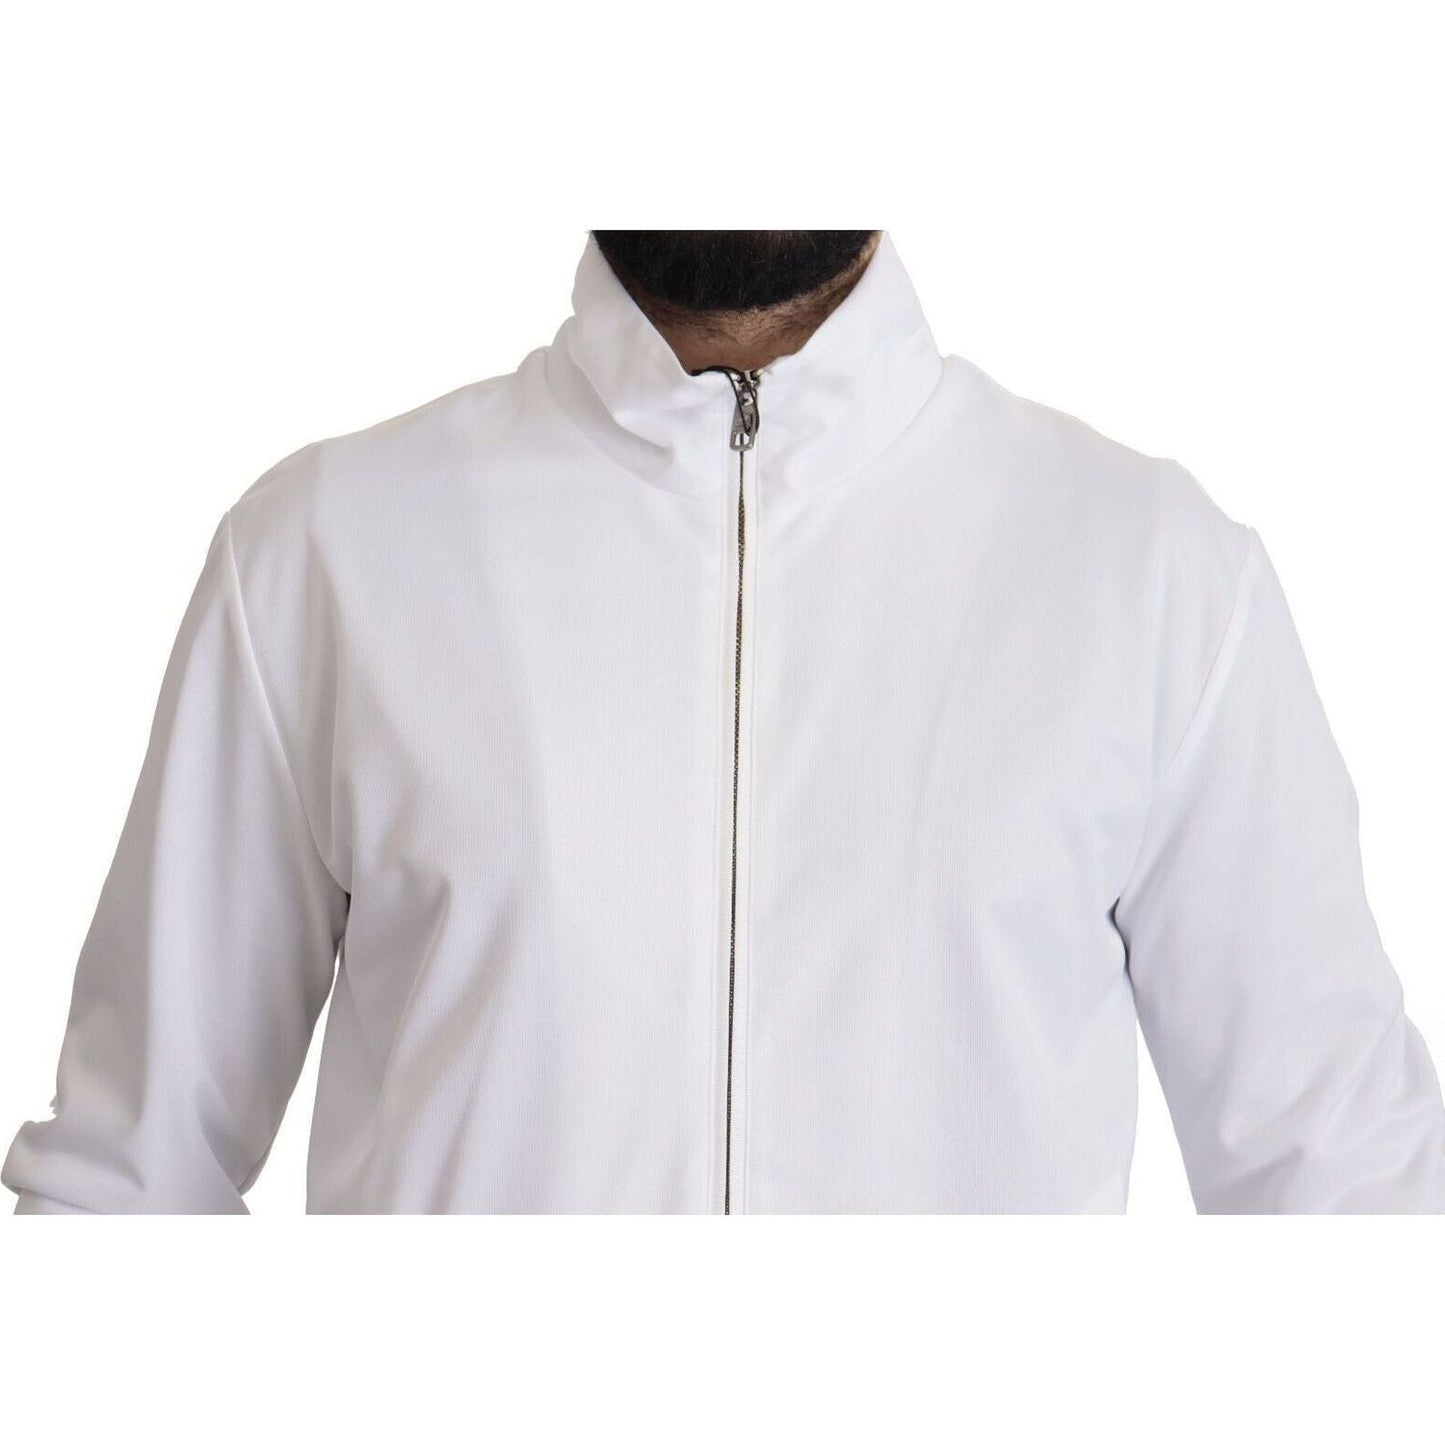 Dolce & Gabbana Sleek White Zip Sweater for Men white-dg-d-n-a-zipper-stretch-sweater s-l1600-33-4-29bad0f0-635.jpg